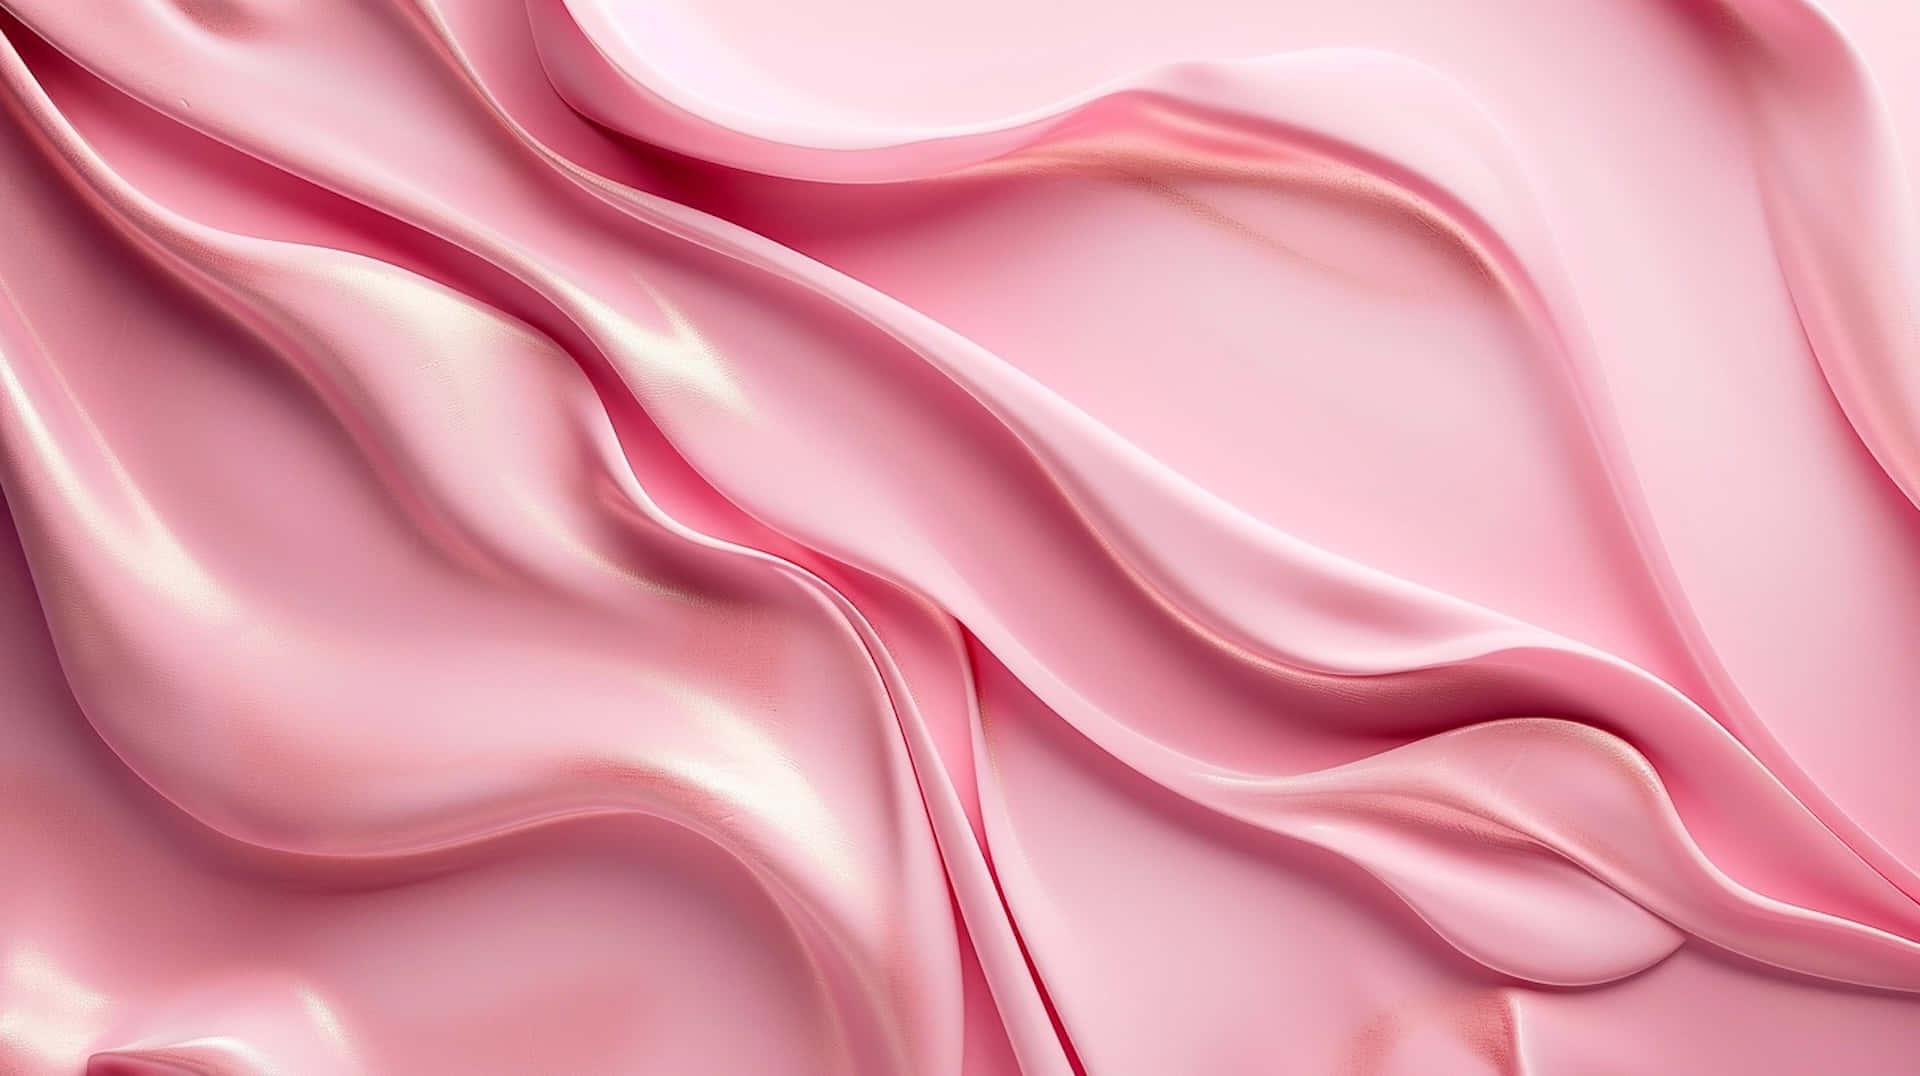 Pink Satin Waves Texture Wallpaper